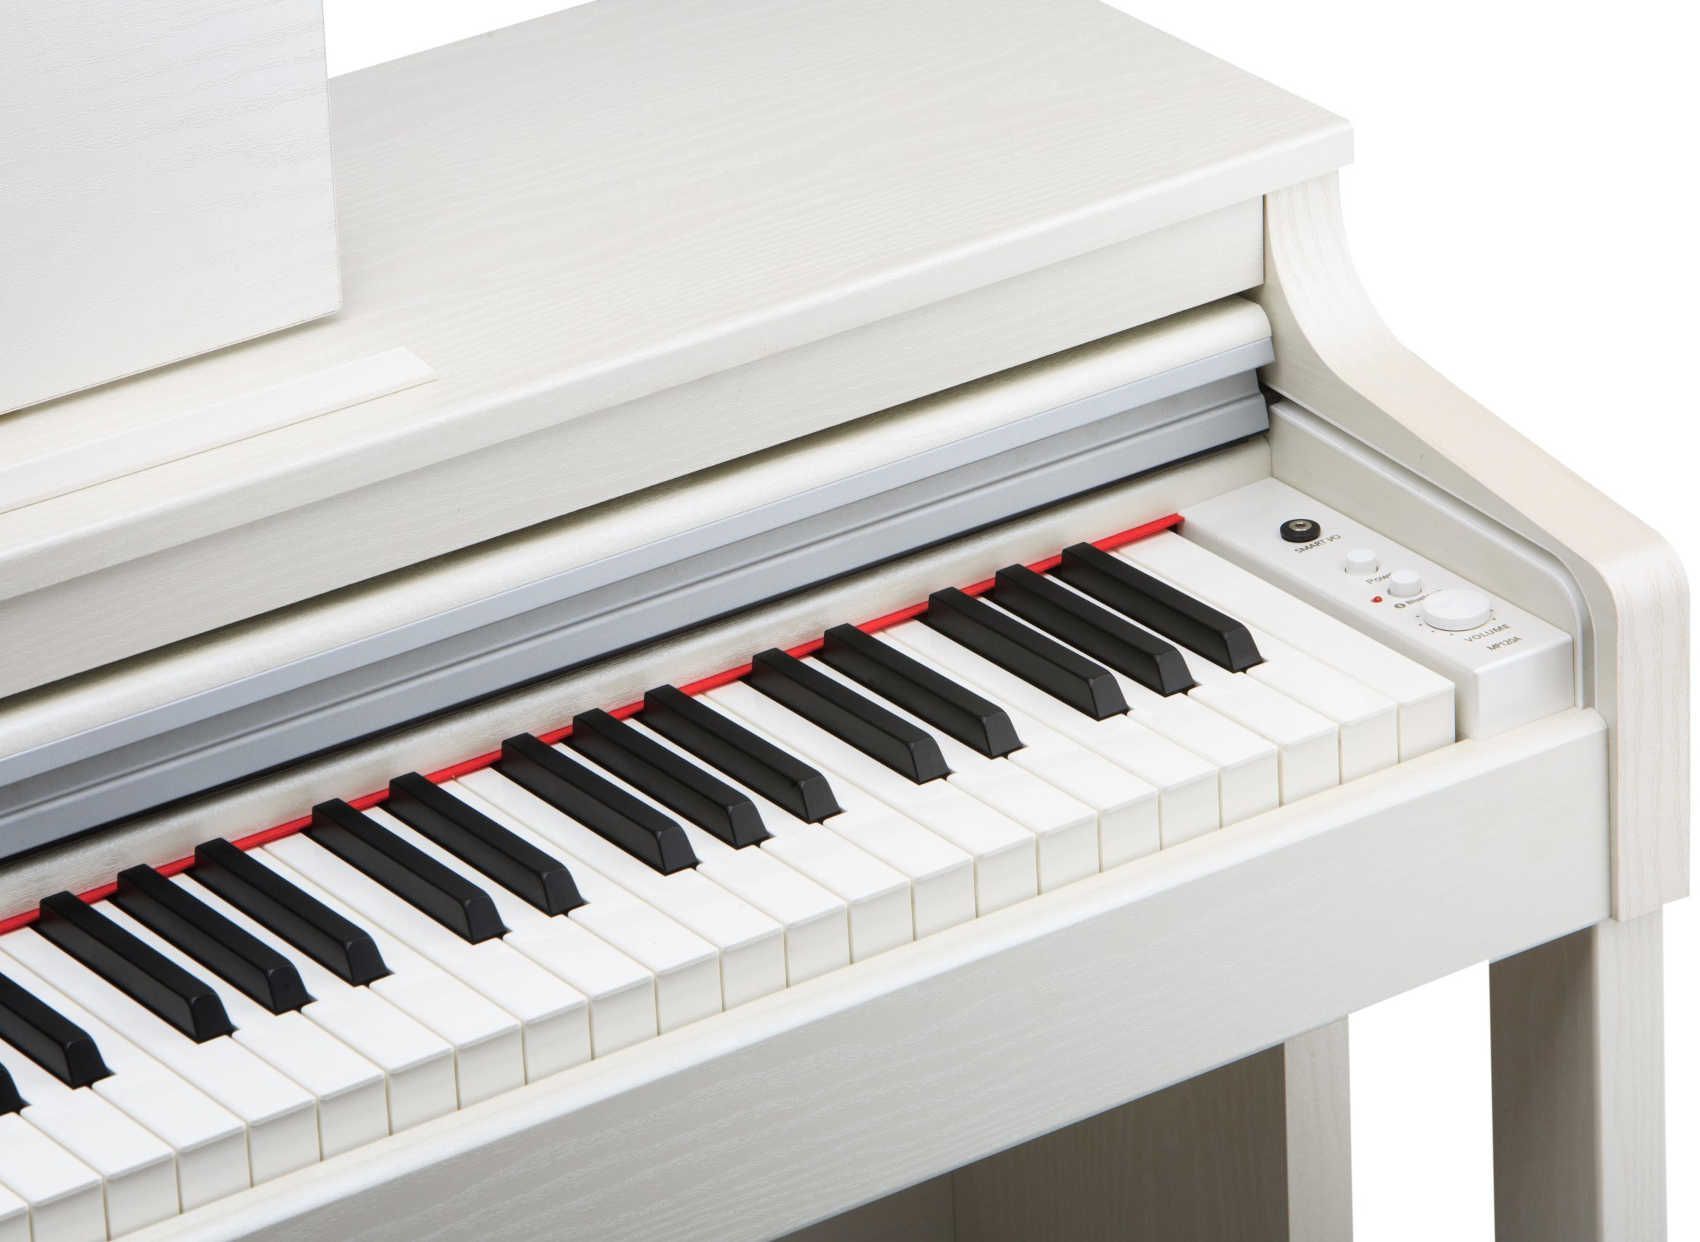 Цифровое пианино kurzweil cup 410 wh белое с банкеткой